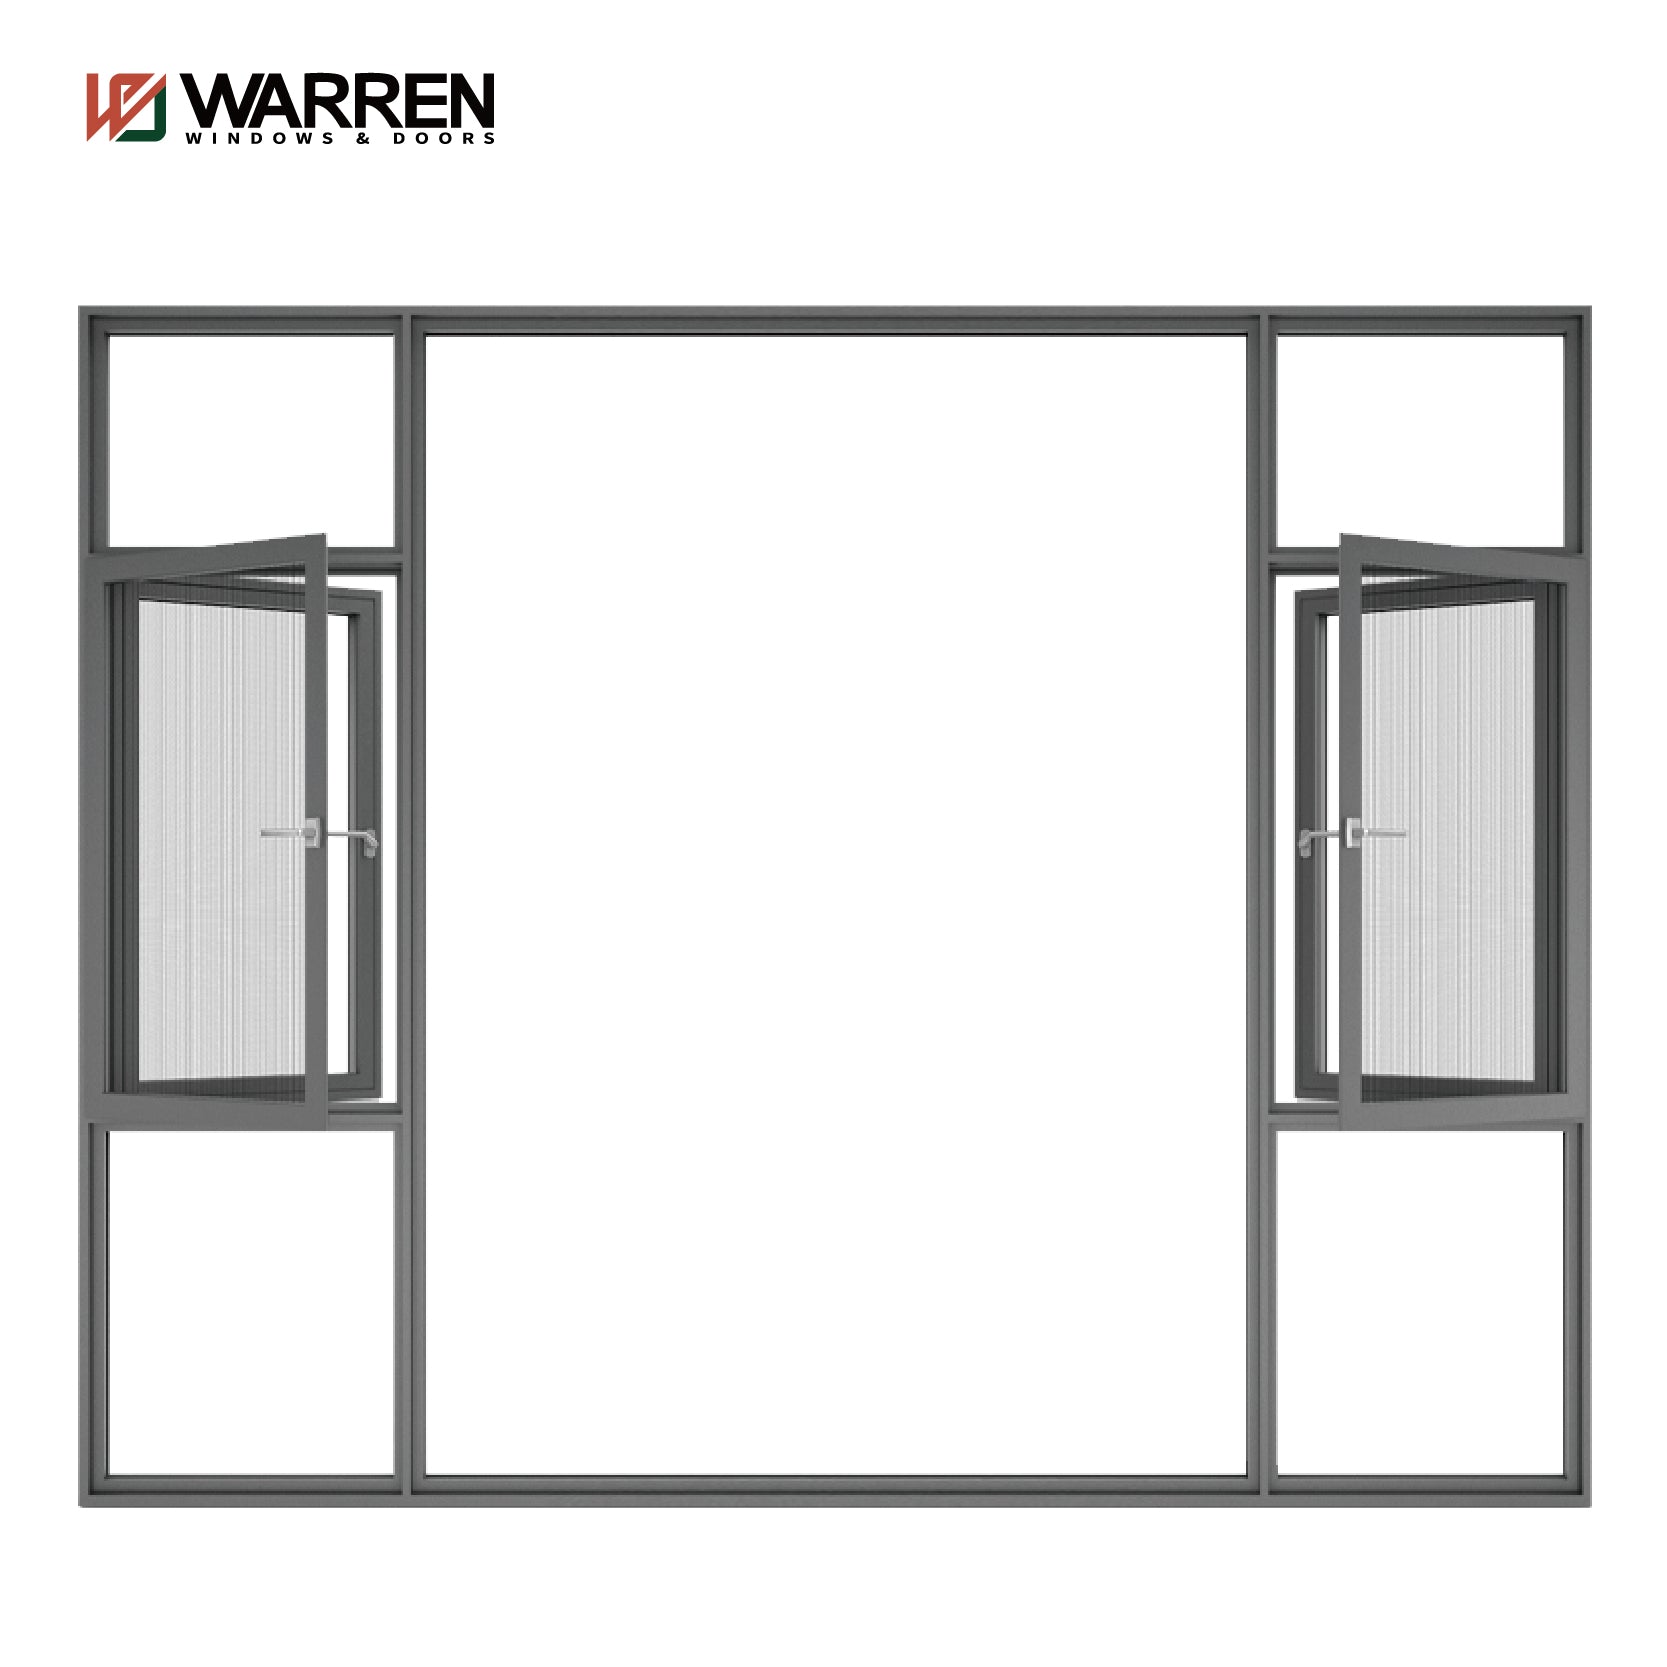 Warren Sound Insulation And Heat Insulation Aluminum Casement Windows Casement Windows With Mosqui To Net